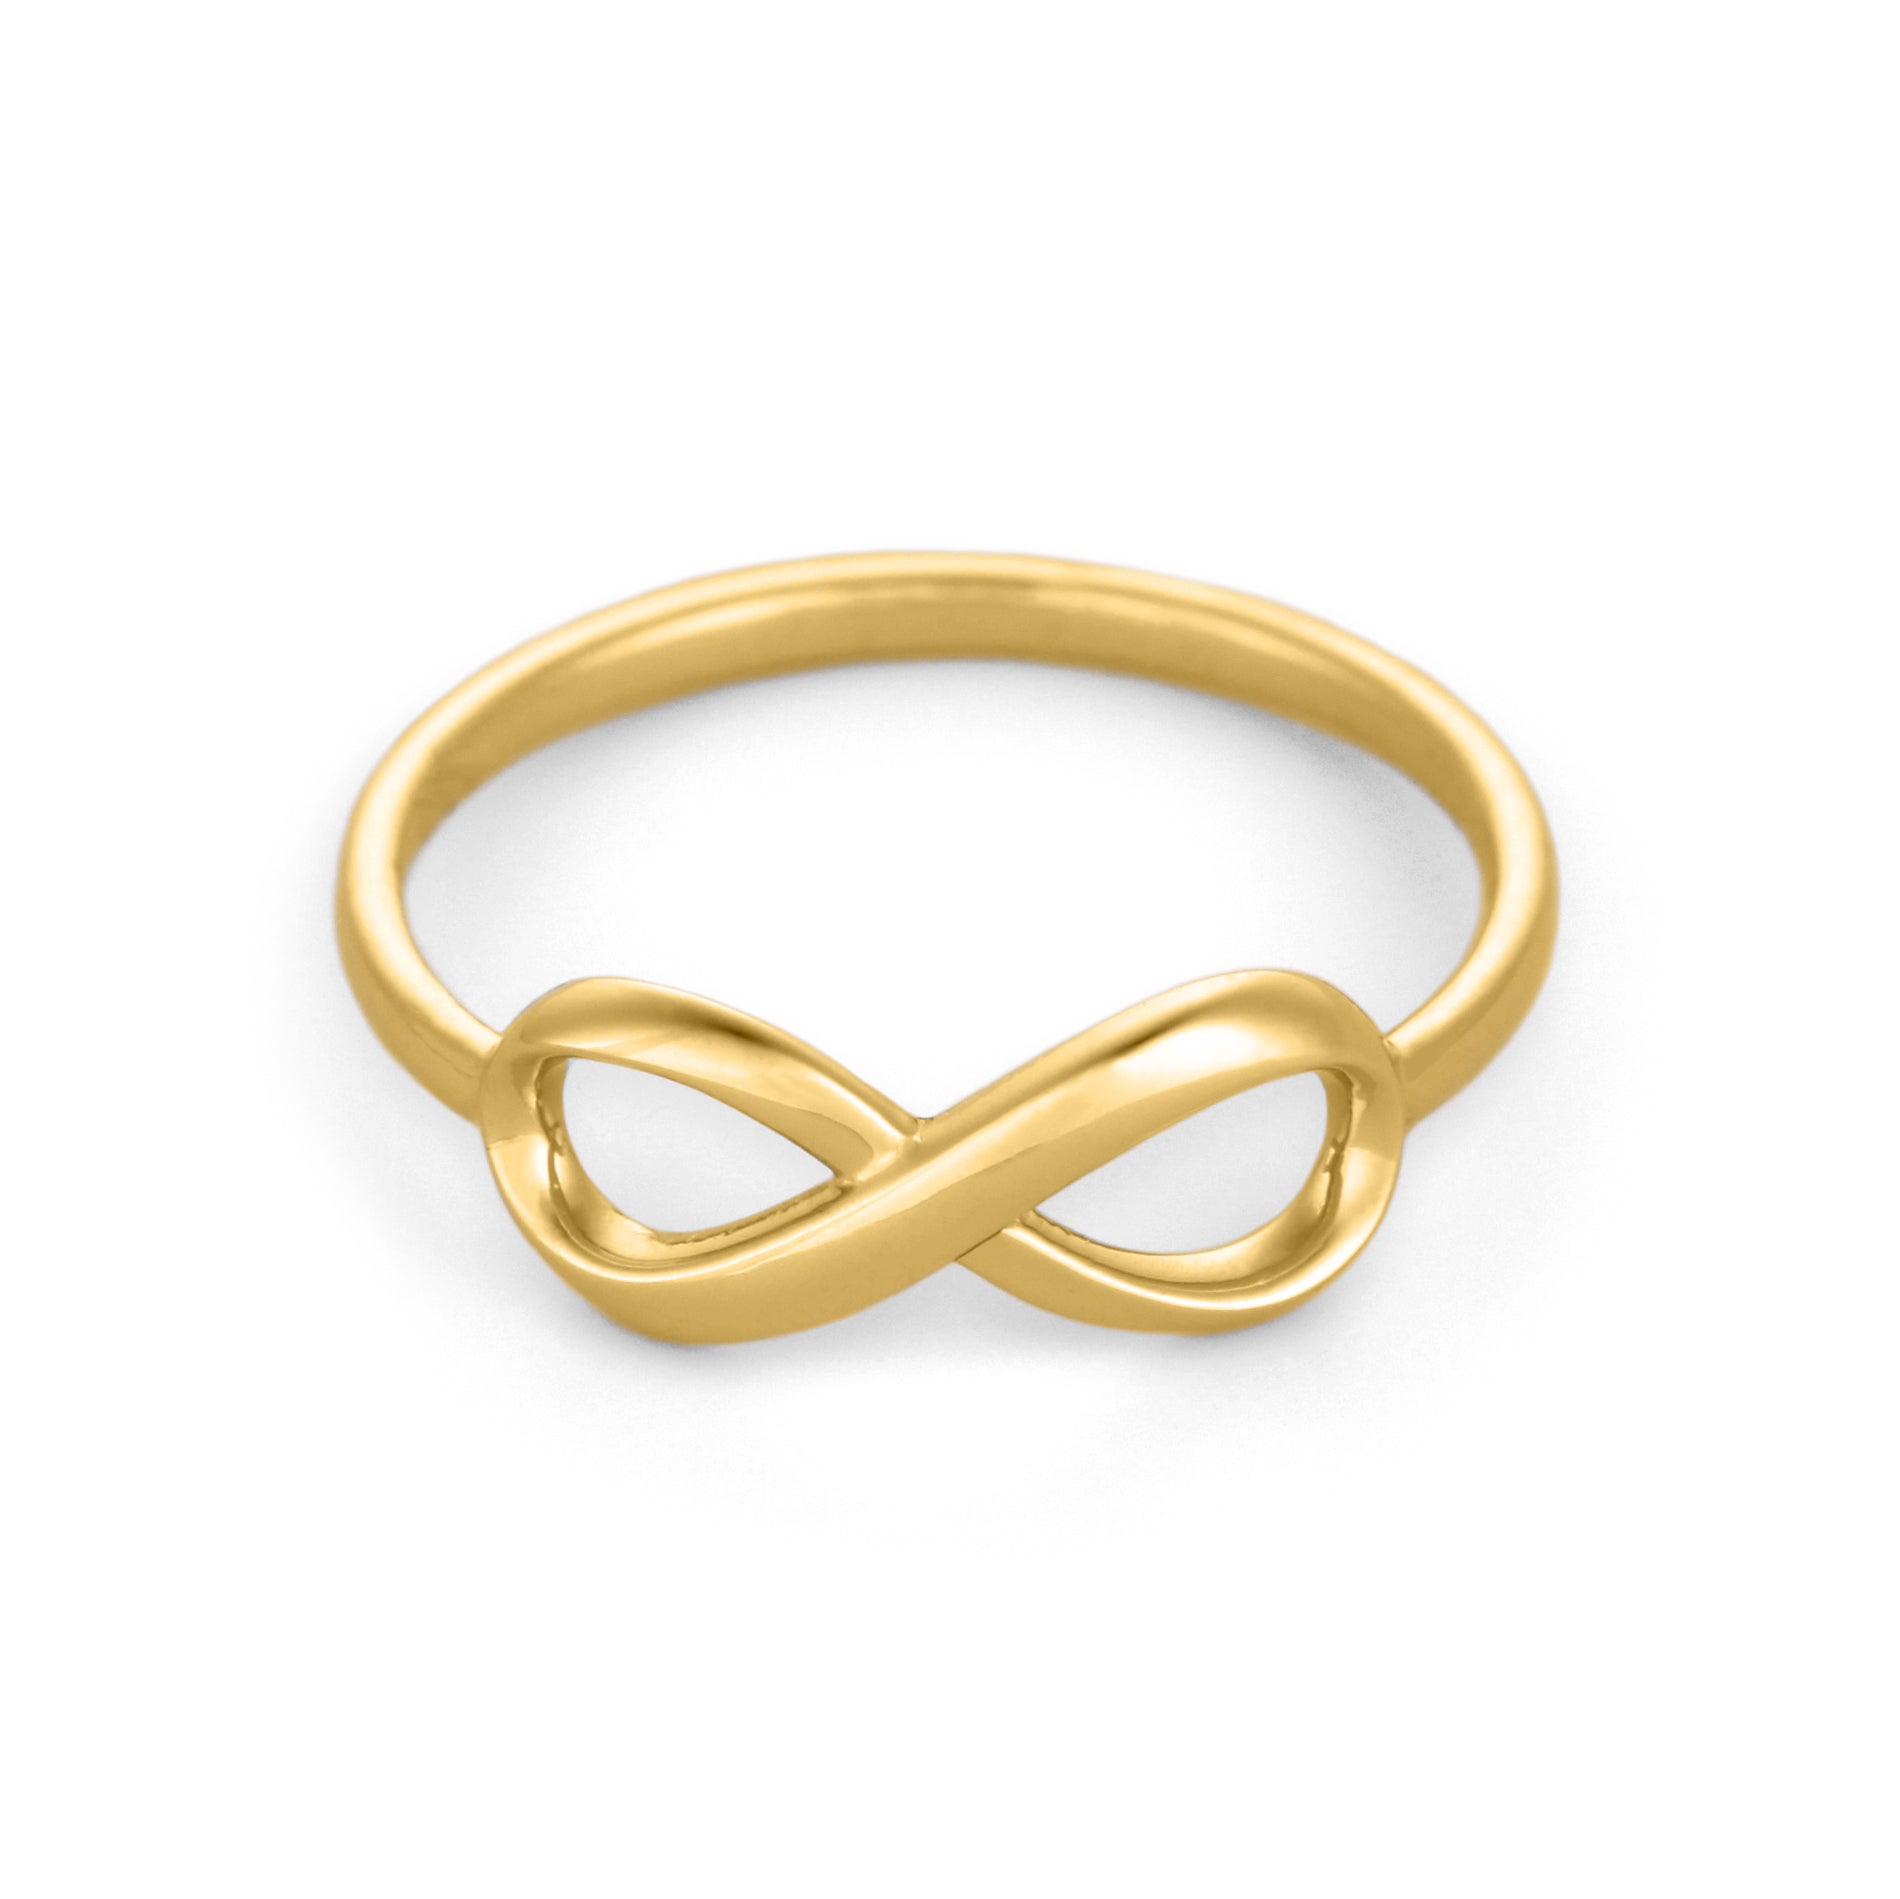 Silver Gold Promise Rings Delicate Design Knot Set Diamond Fashion Ring  Light | eBay